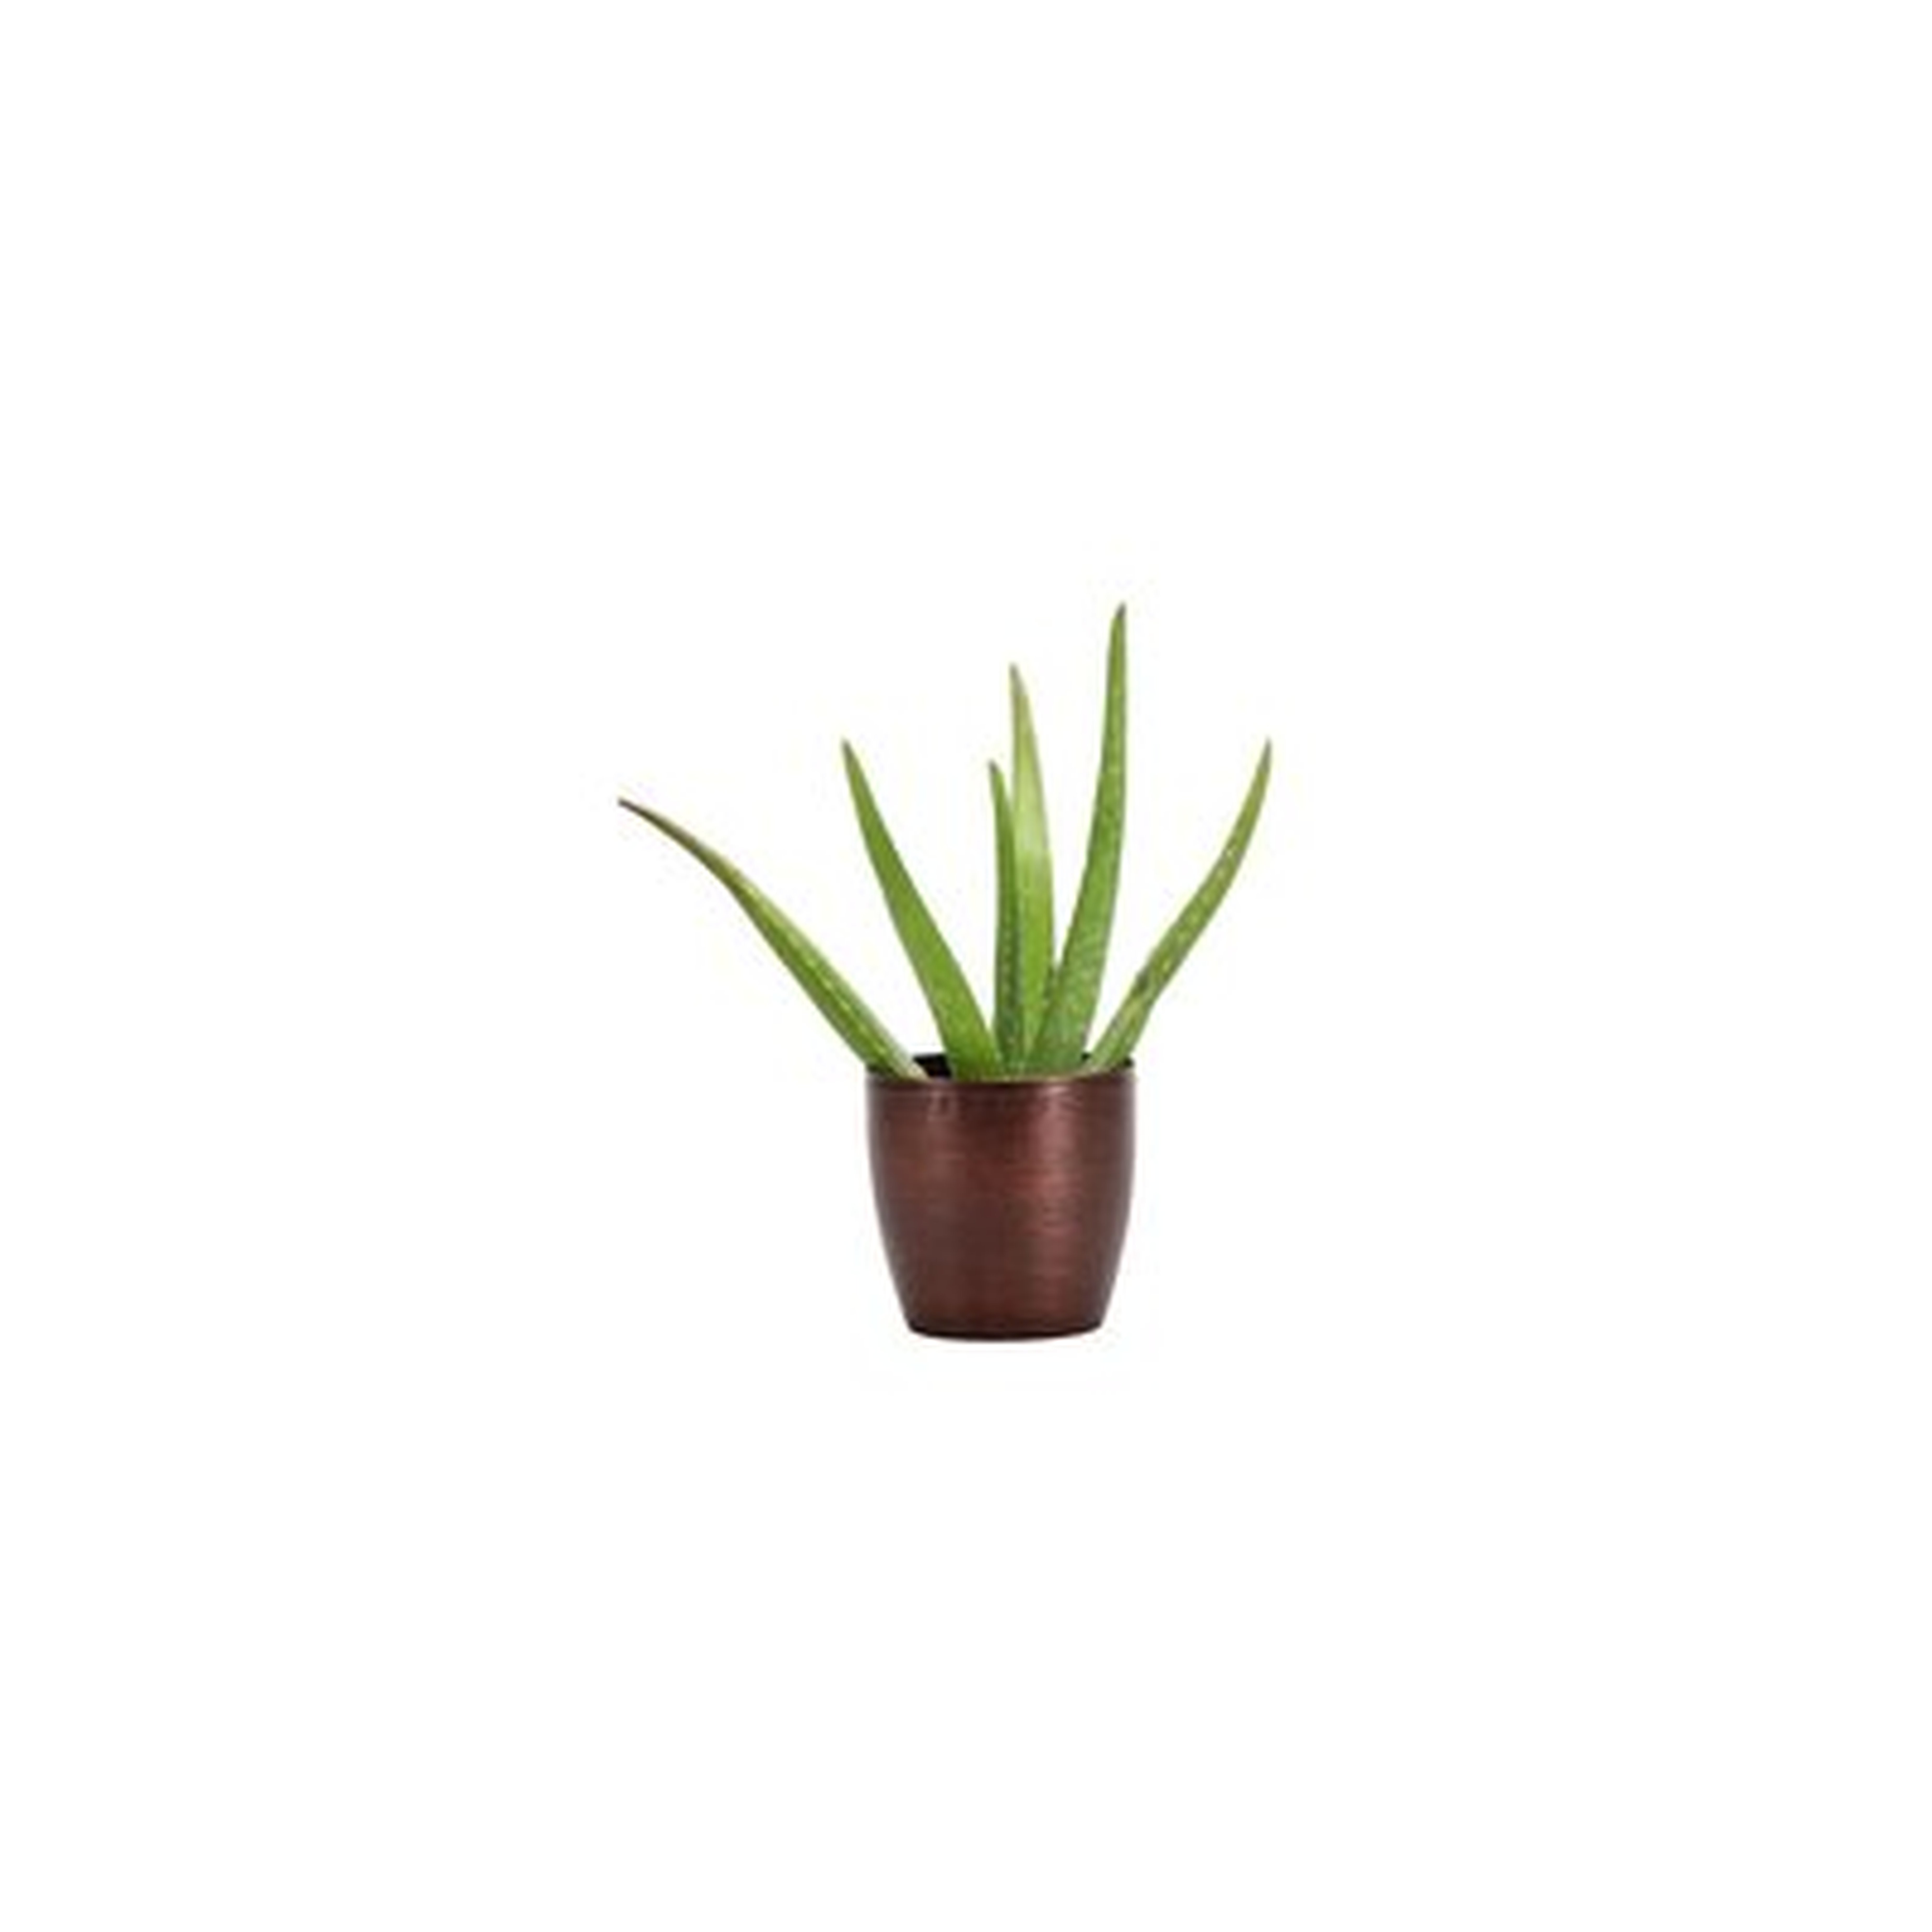 6" Live Aloe Plant in Pot - Wayfair